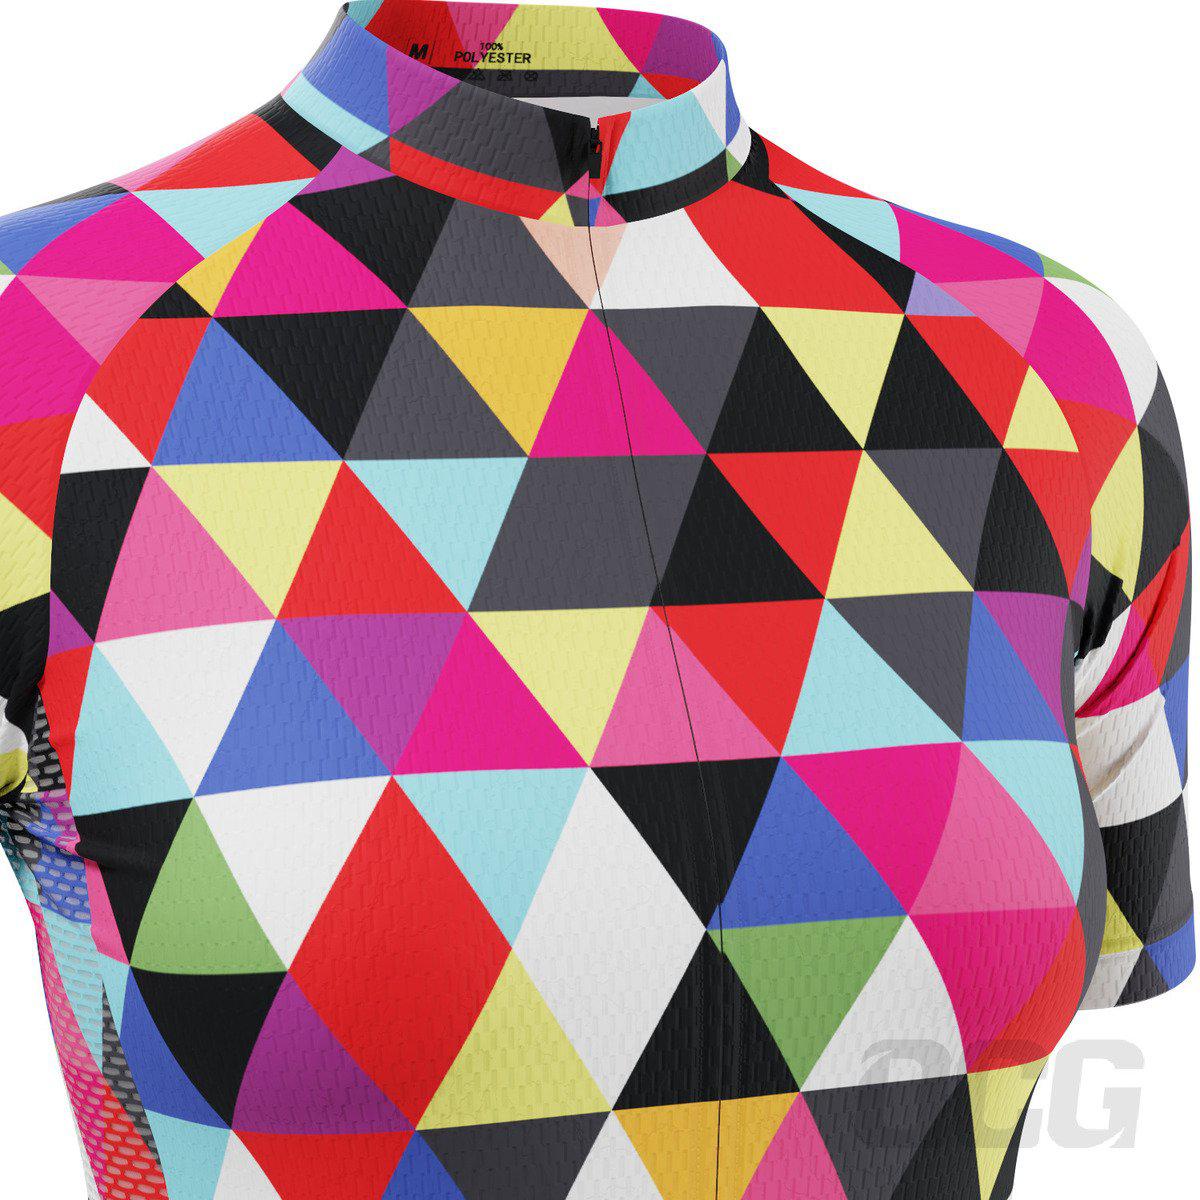 Women's High Viz Color Triangles Short Sleeve Cycling Jersey